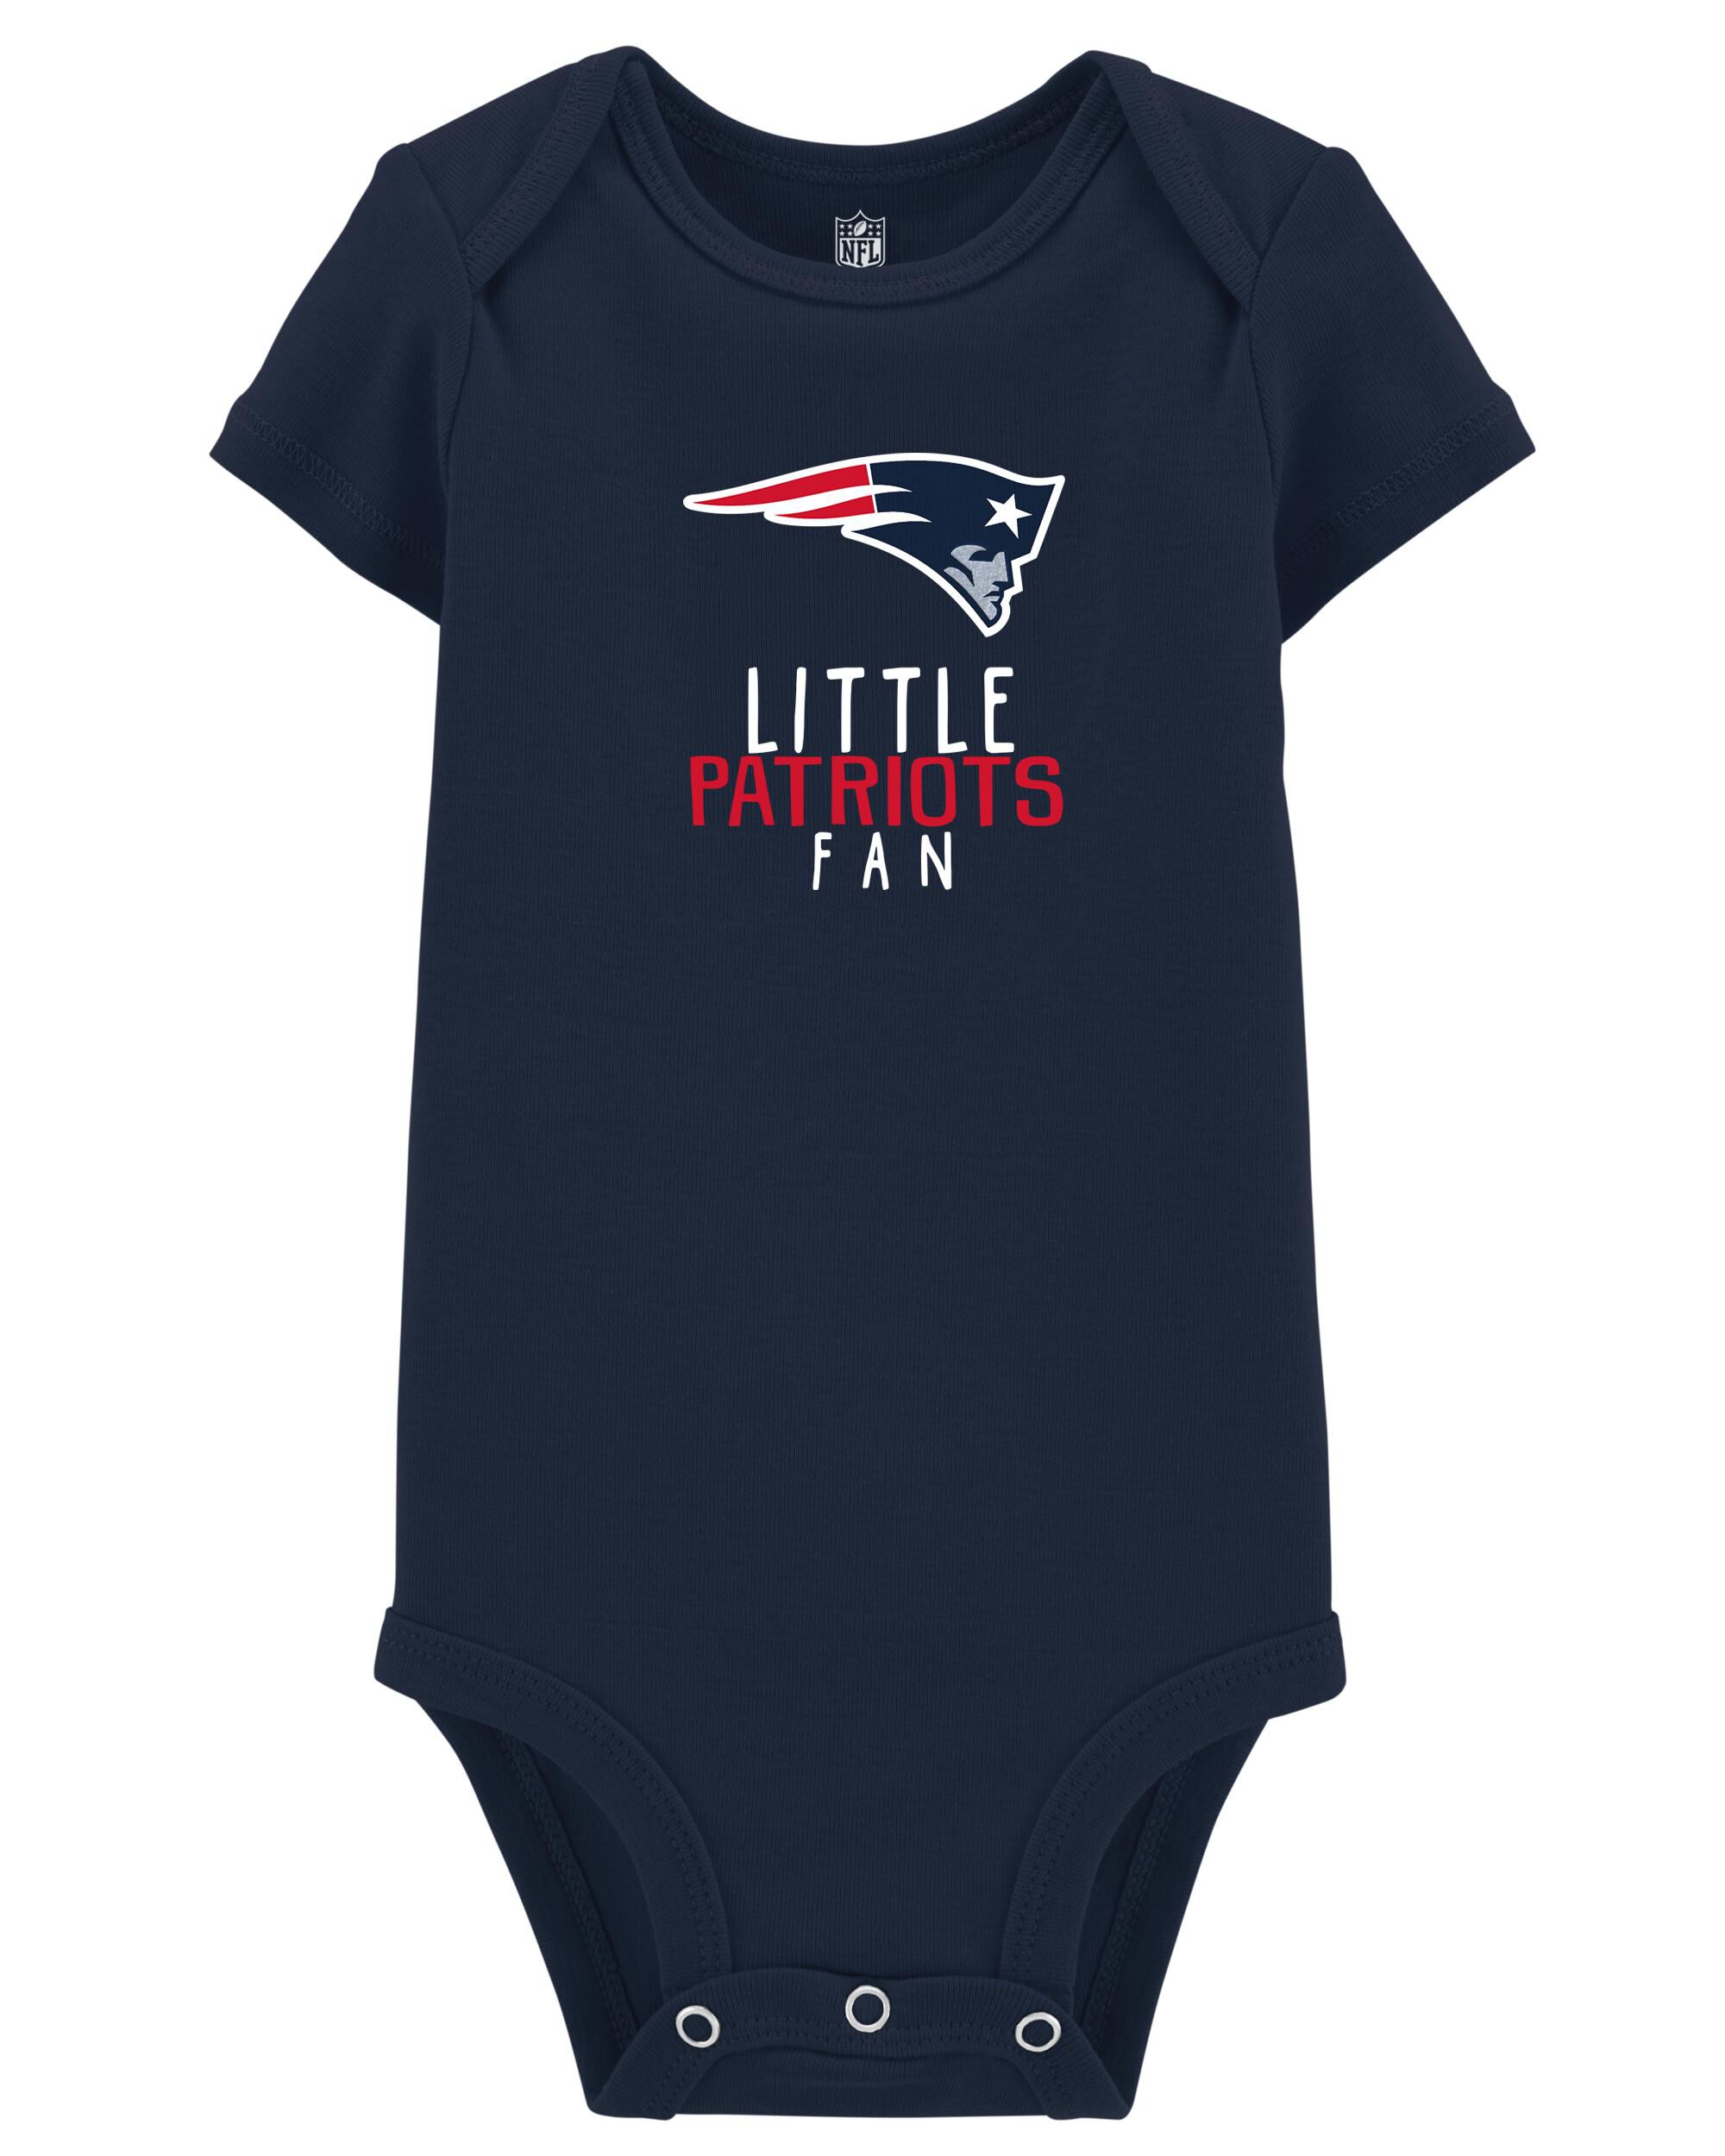 infant patriots football jersey